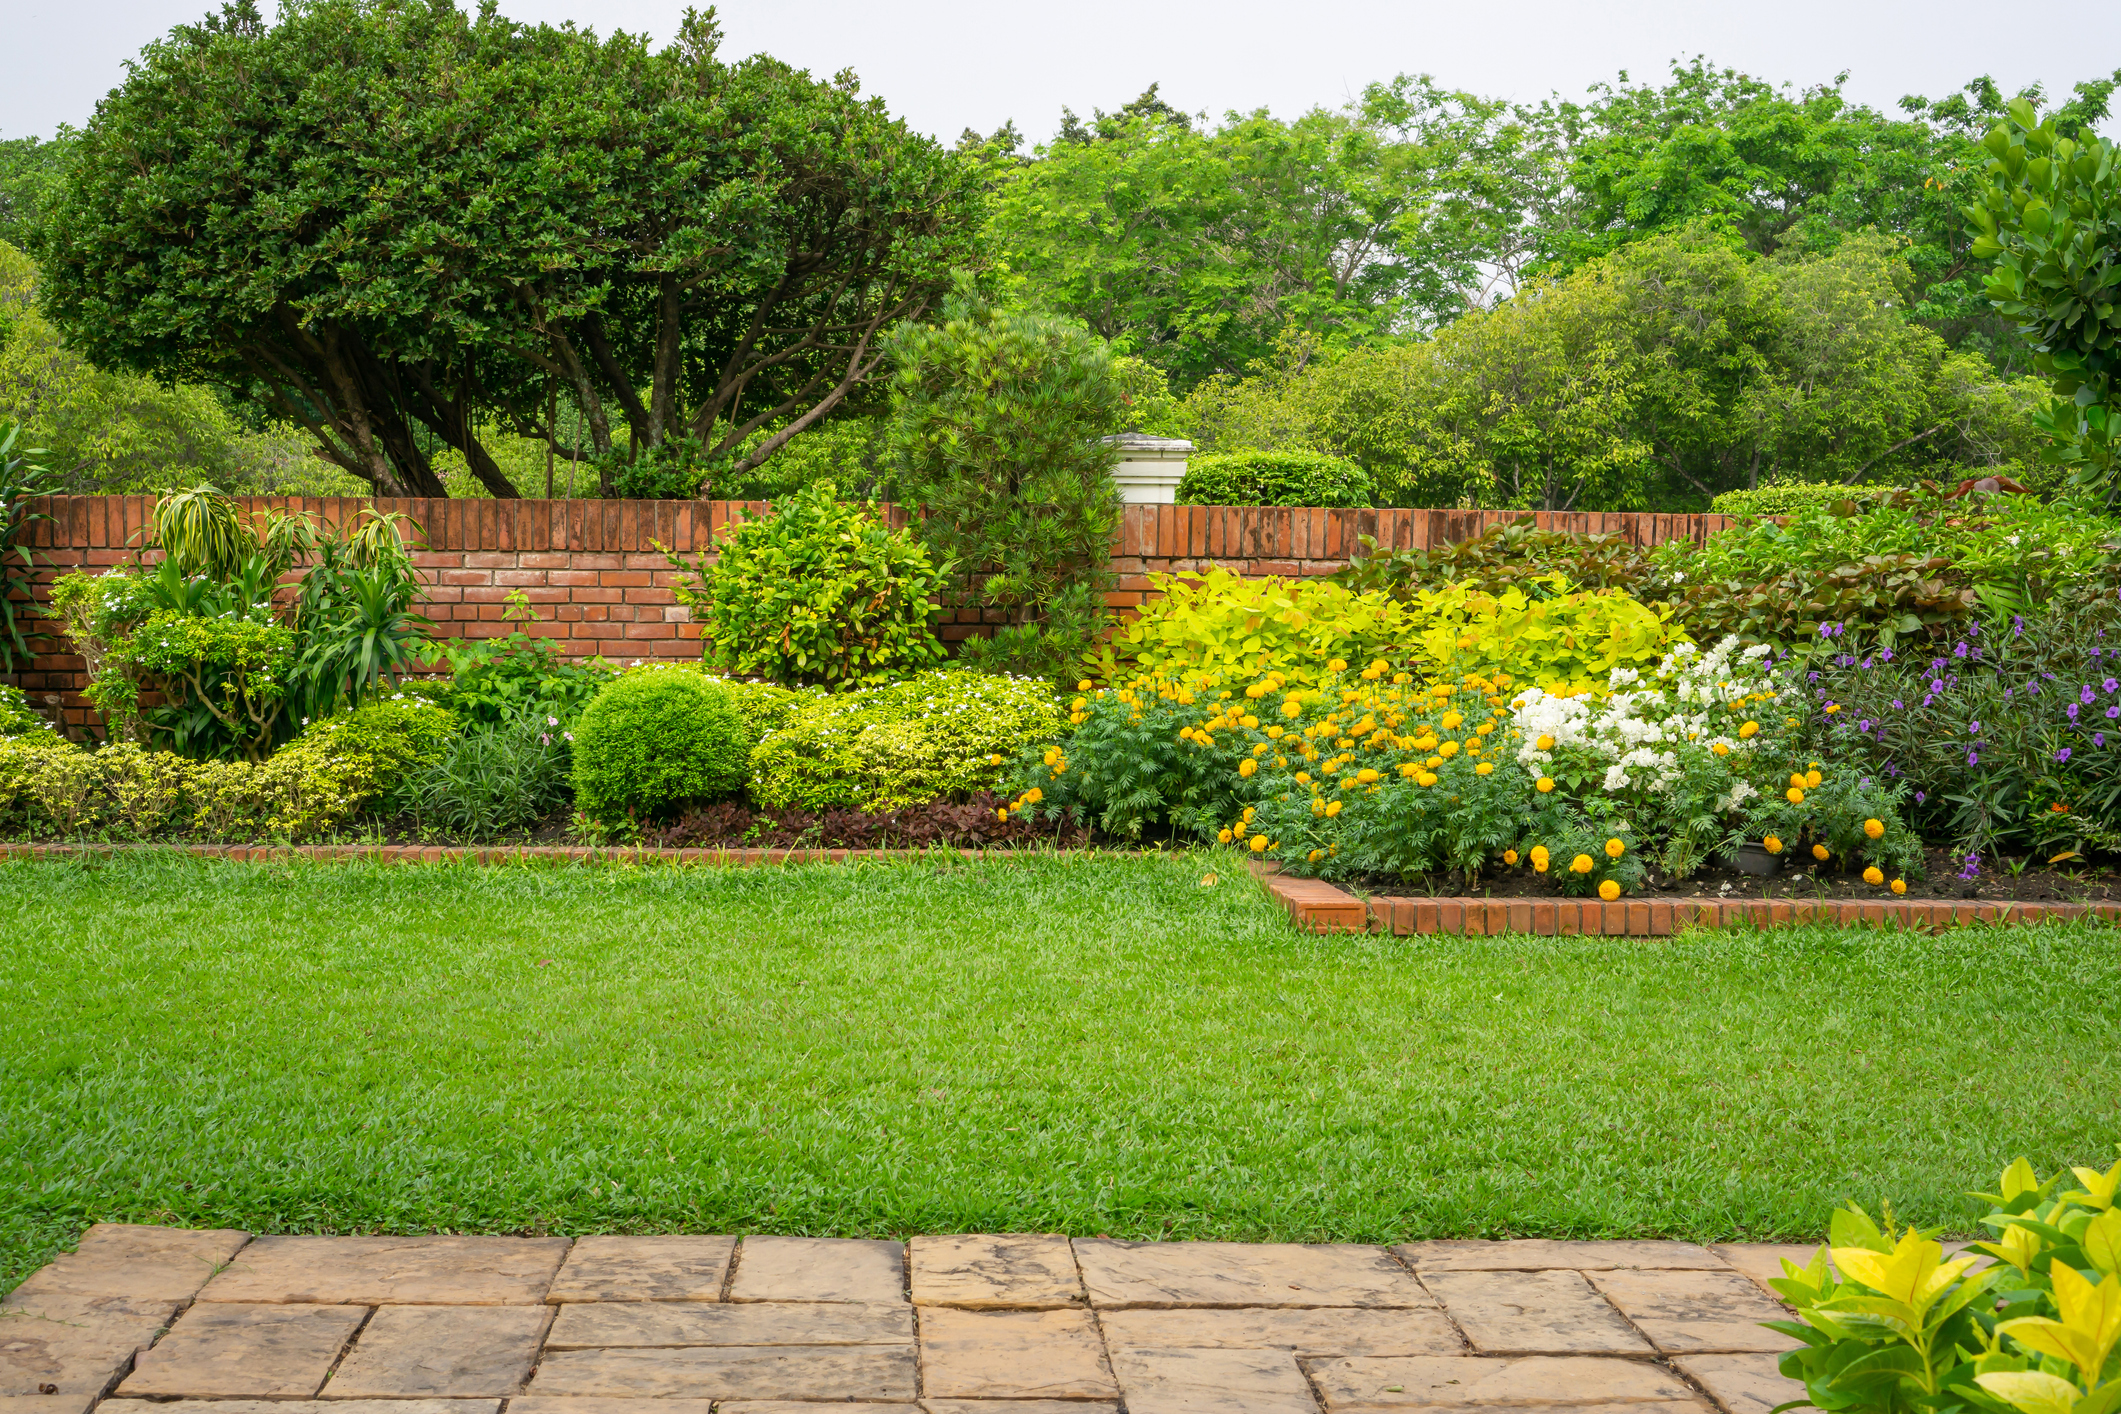 a green lawn and garden near a brick wall